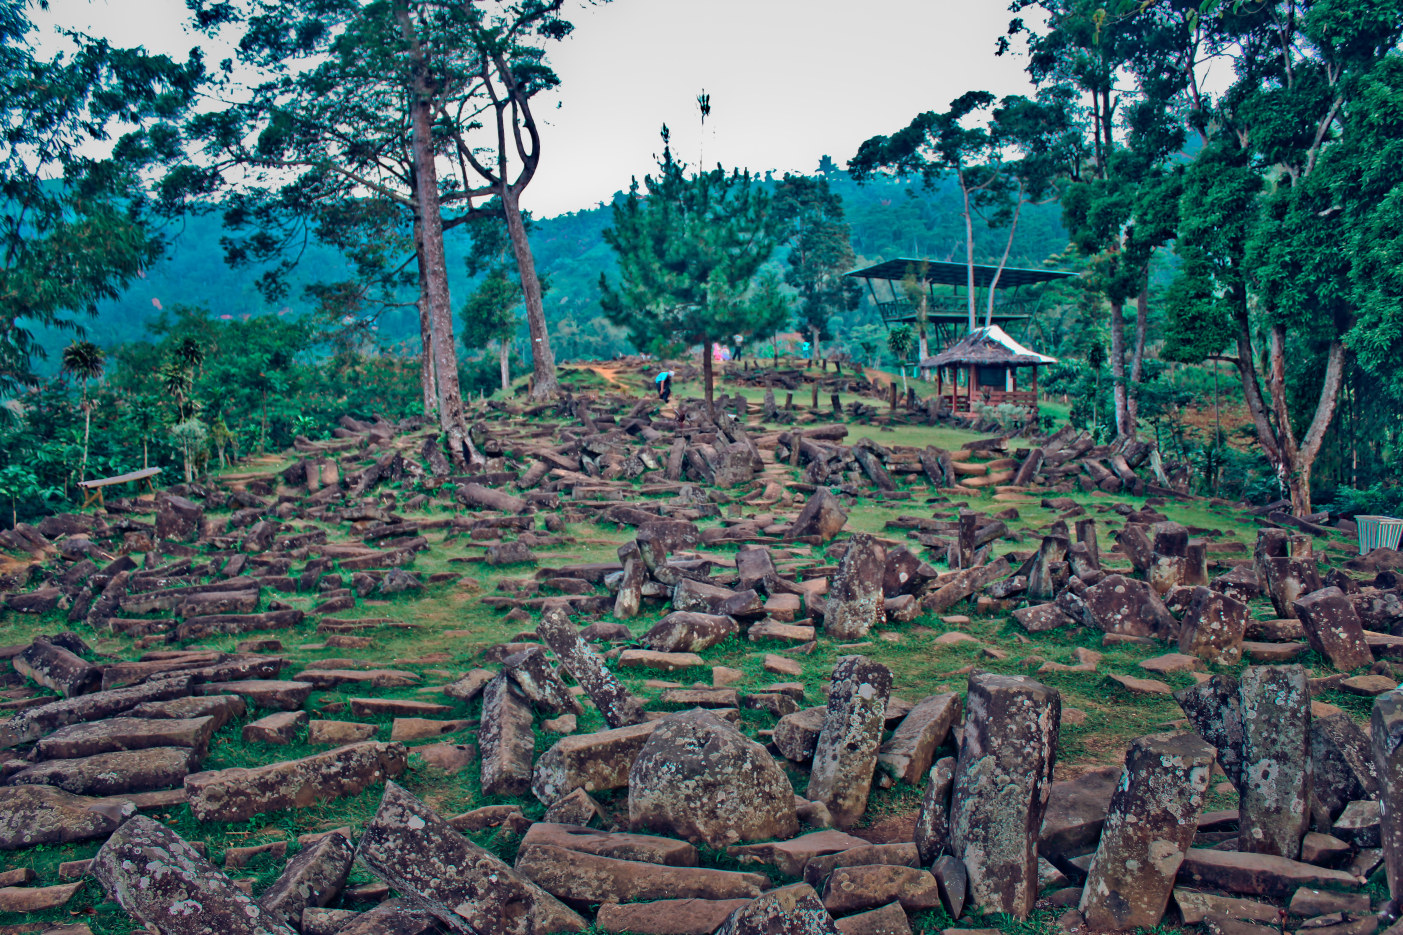 Ini Alasannya Kenapa Kamu Harus Tahu Sejarah Situs Padang Sebagai Salah Satu Mahakarya Megalitik di Dunia